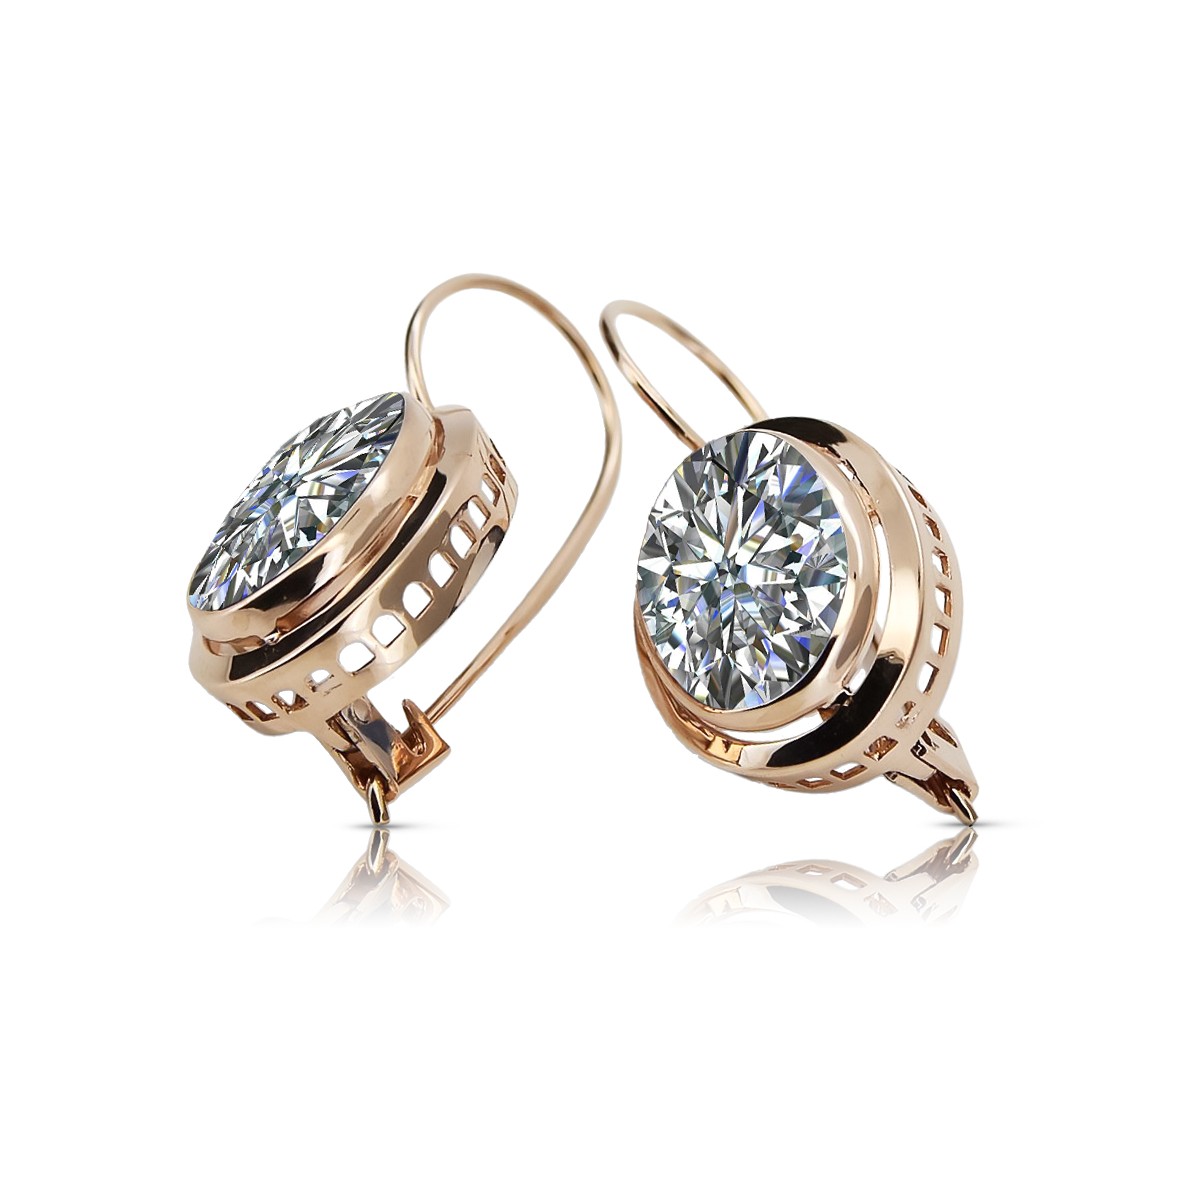 "Vintage 14K Rose Gold Earrings with Sparkling Zircon Detailing" vec114